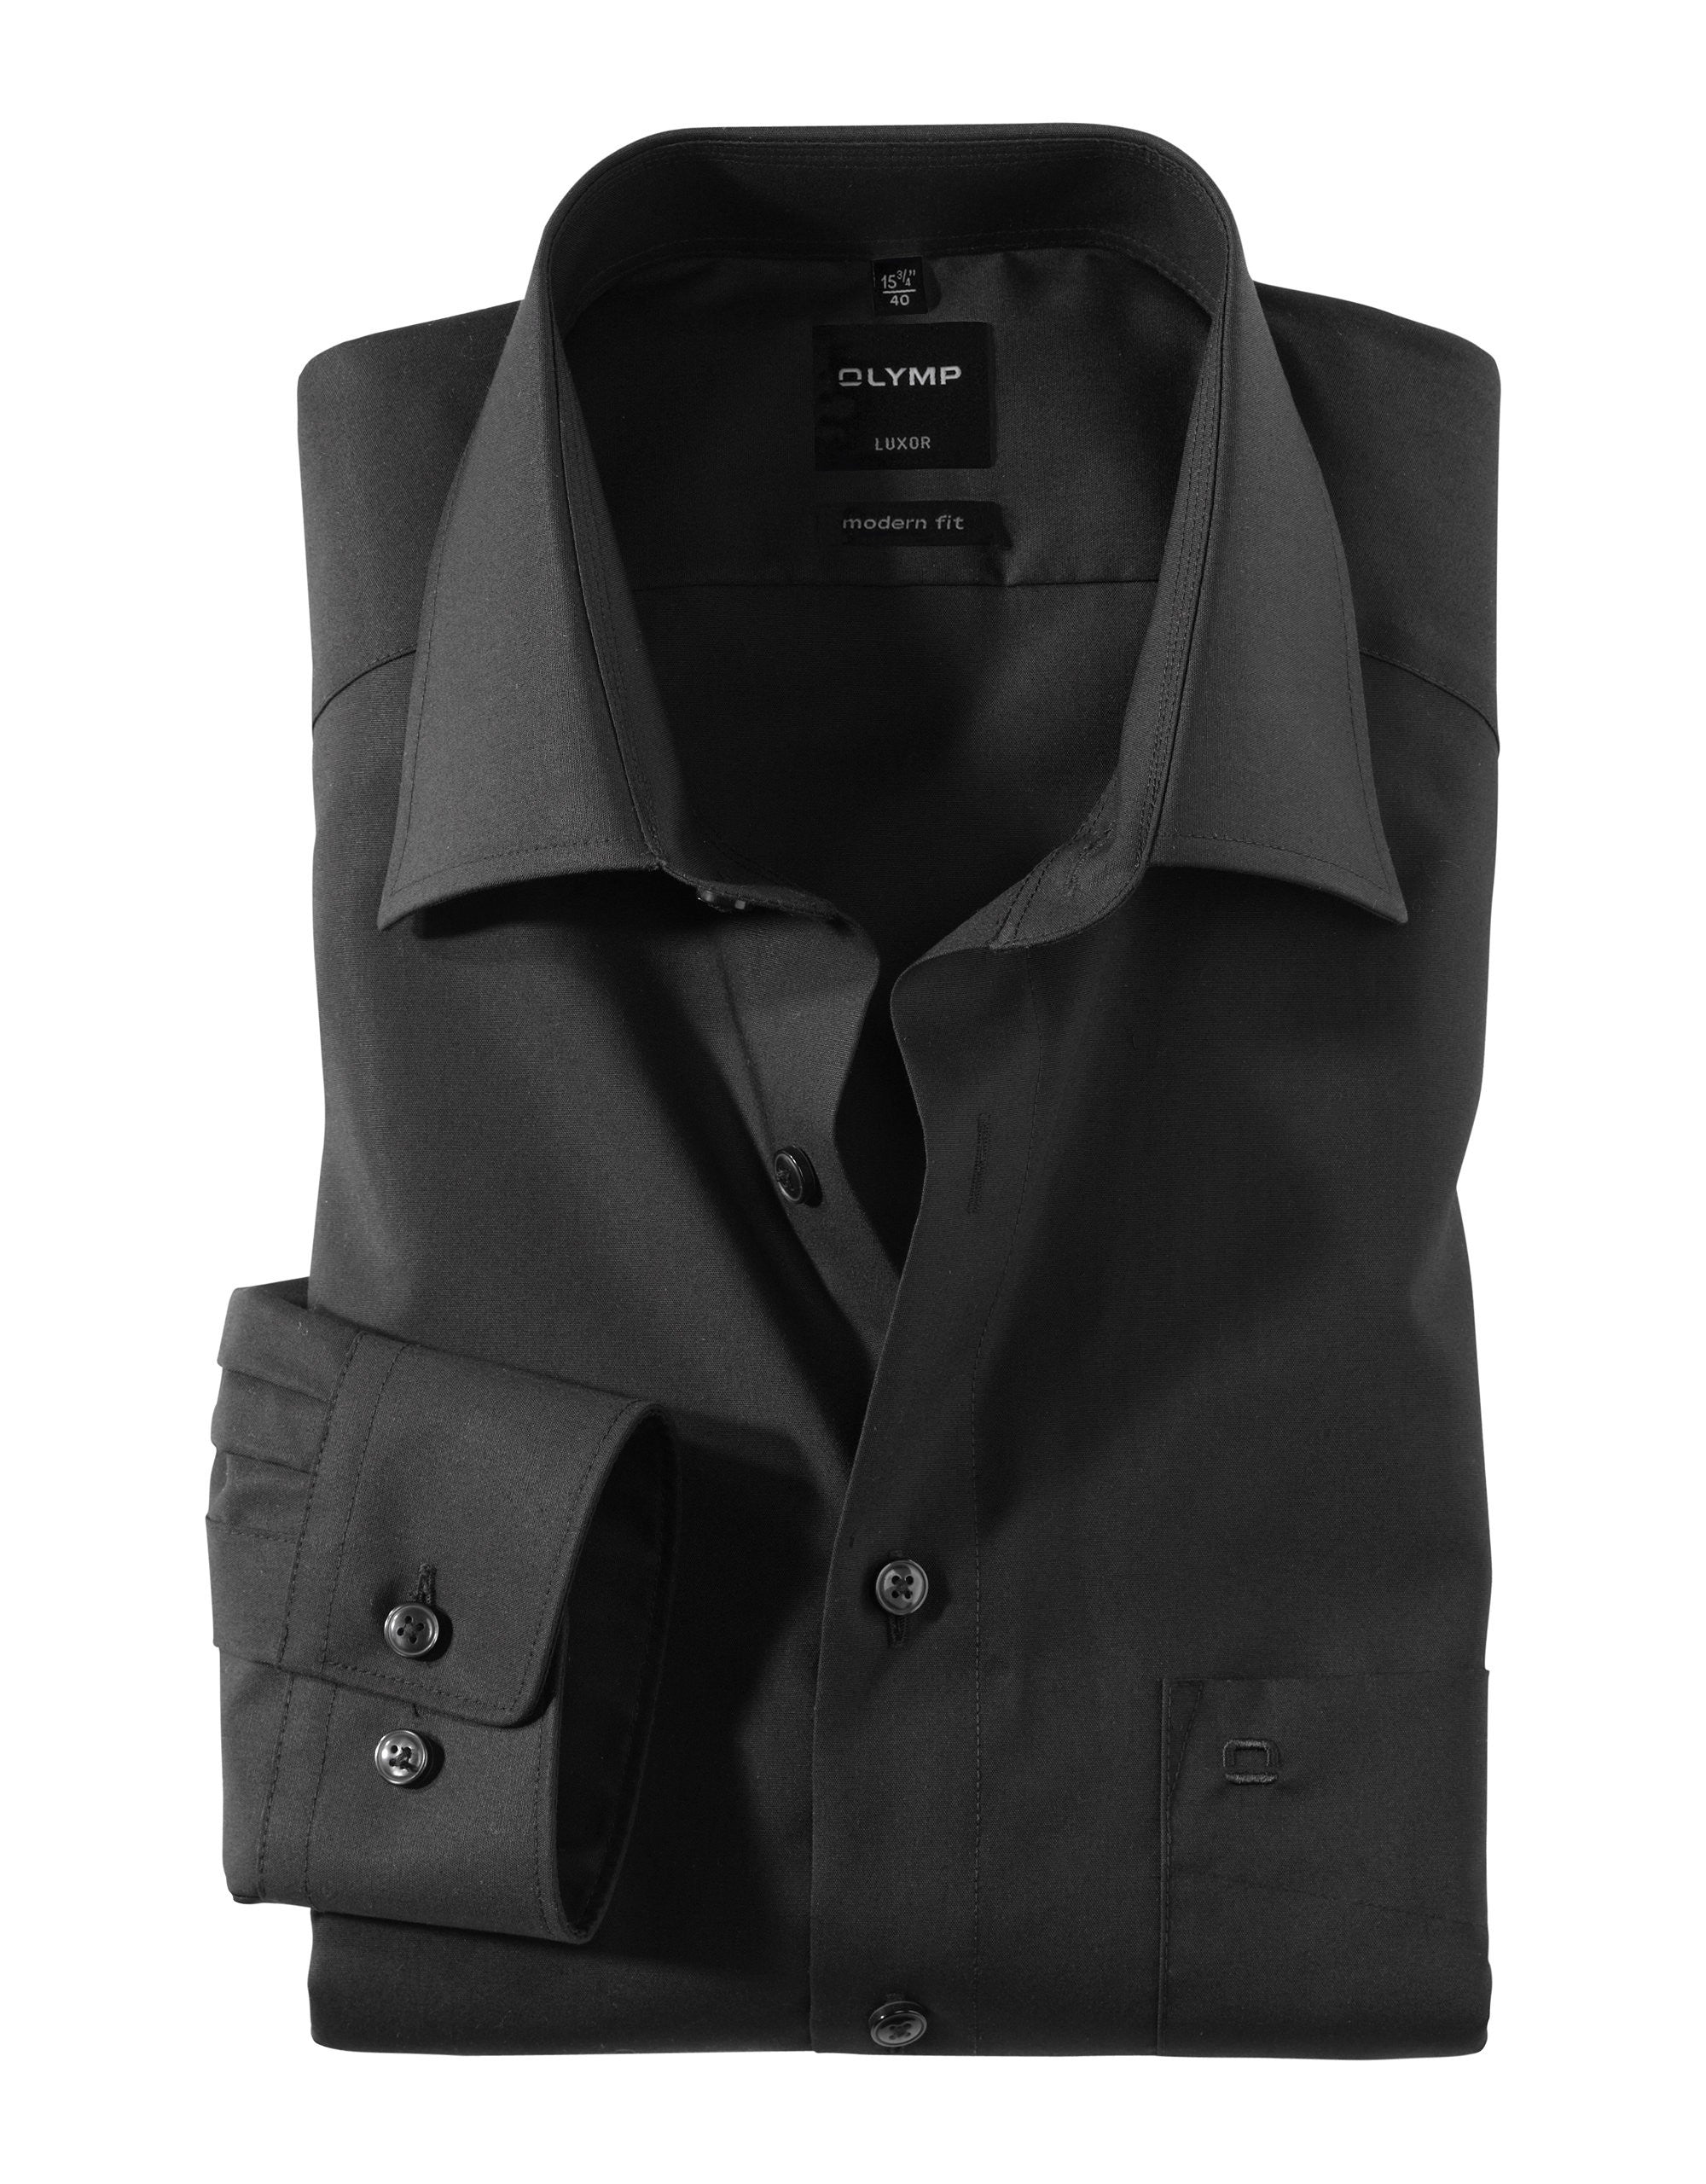 Olymp Modern Fit Black Shirt